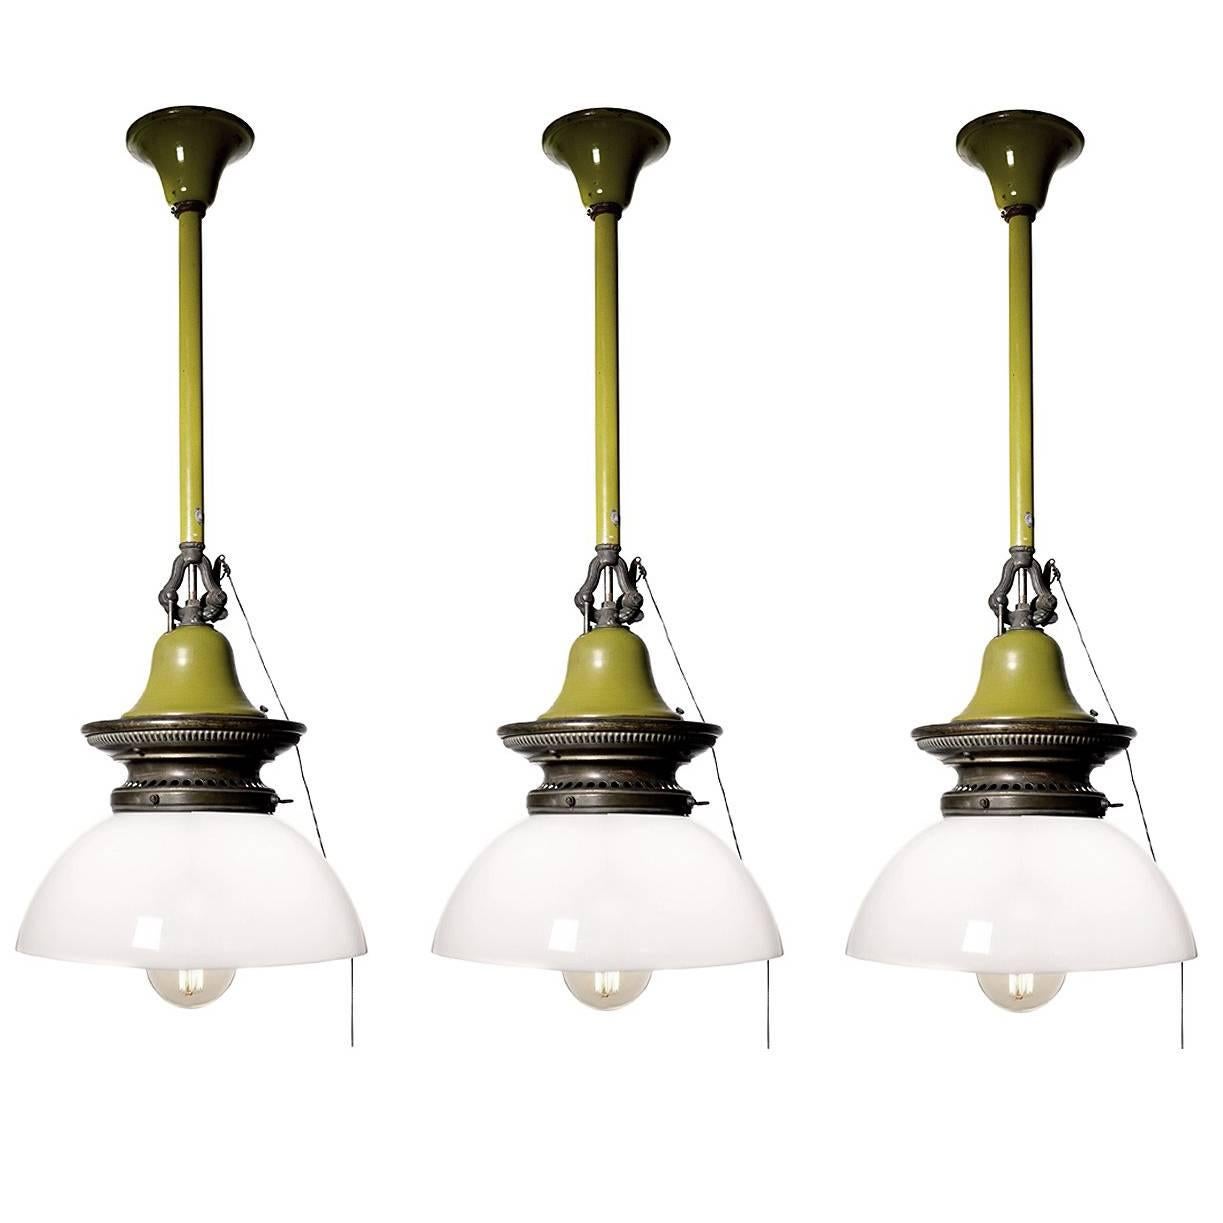 Humphrey Electrified Gas Lamps